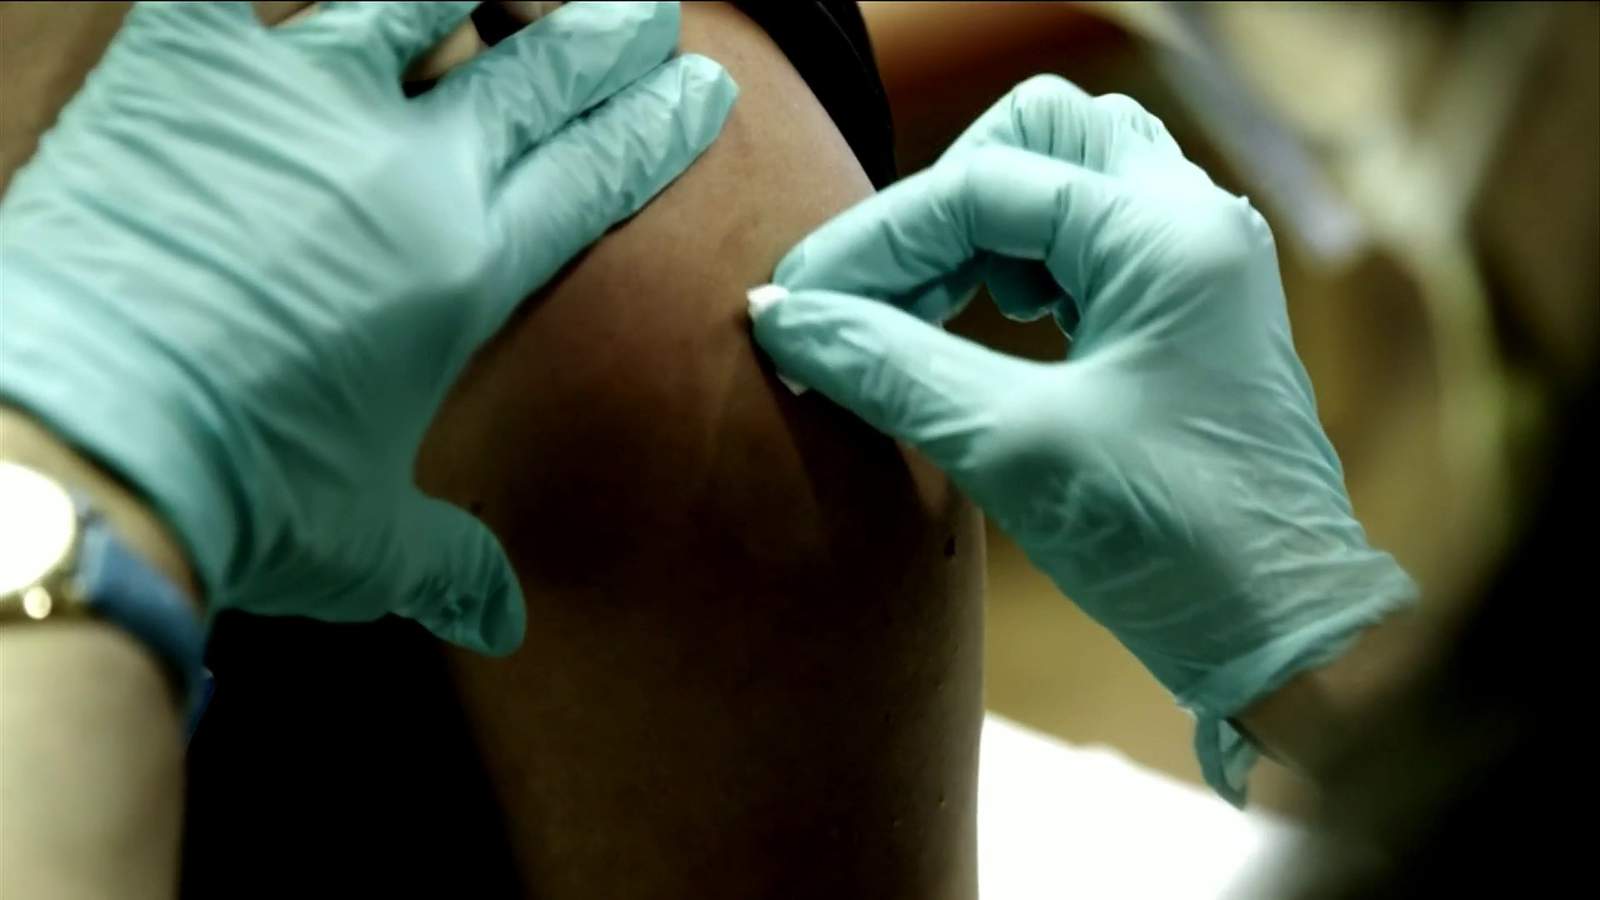 Doctors urge Black community to get vaccine, once it’s deemed safe